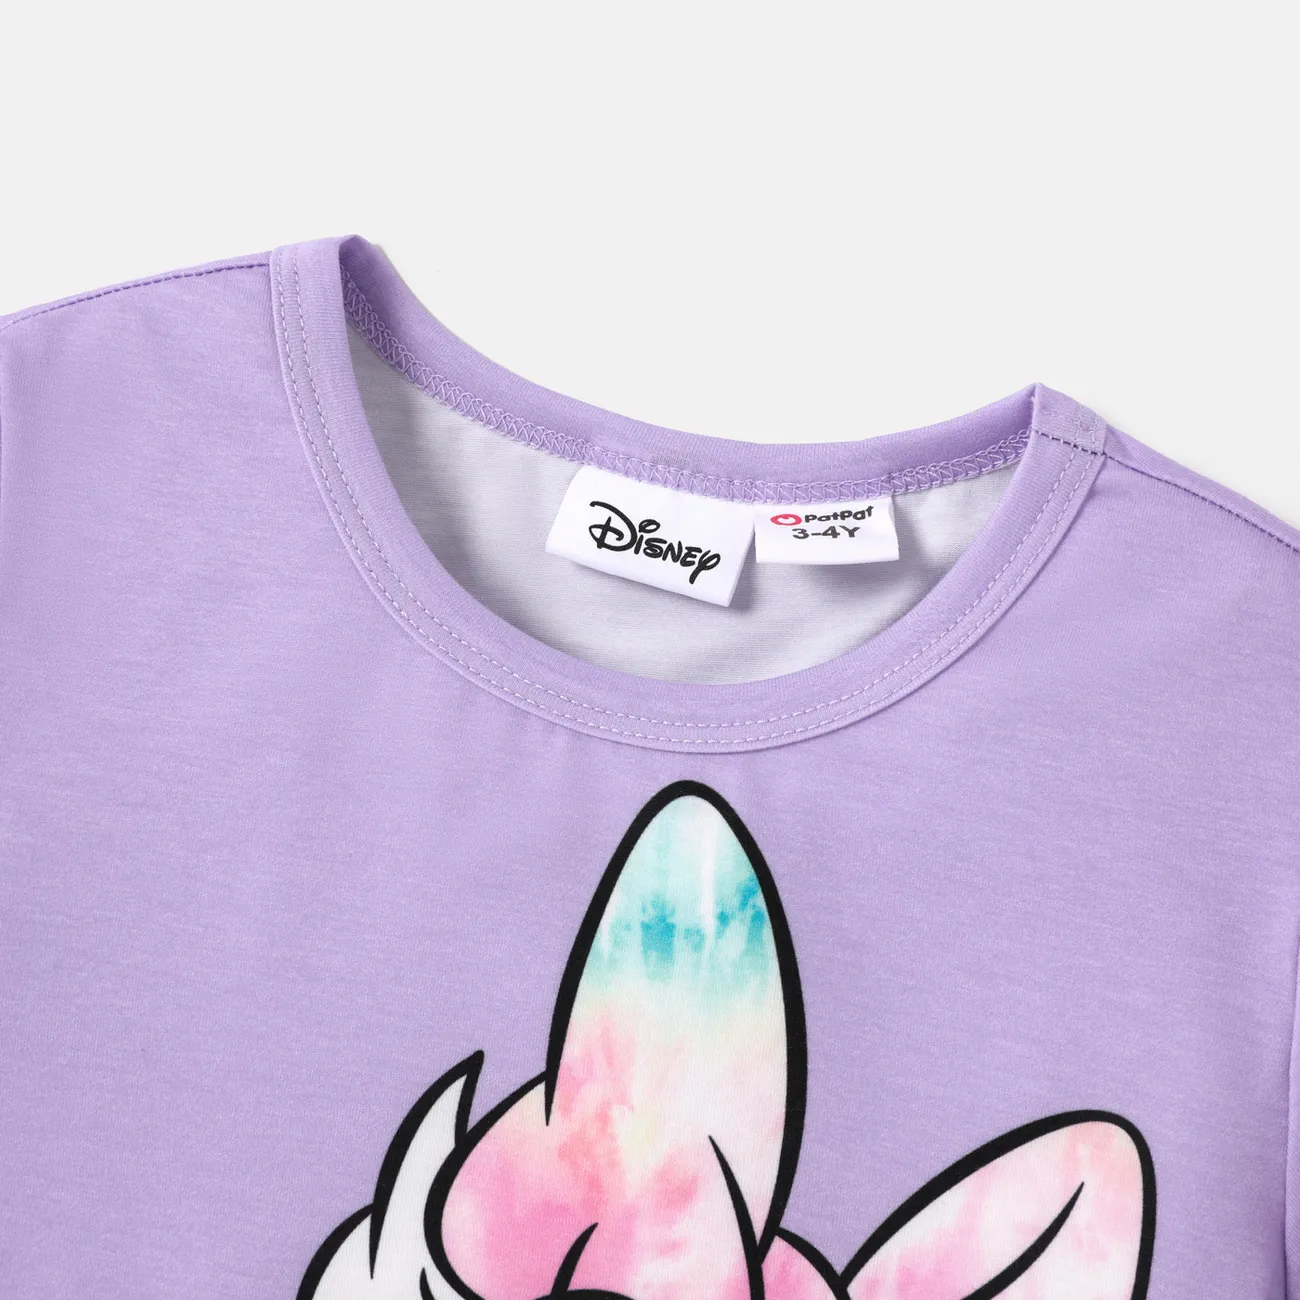 Disney Mickey and Friends Toddler/Kid Girl/Boy Character Print Naia™ Short-sleeve Tee Light Purple big image 1